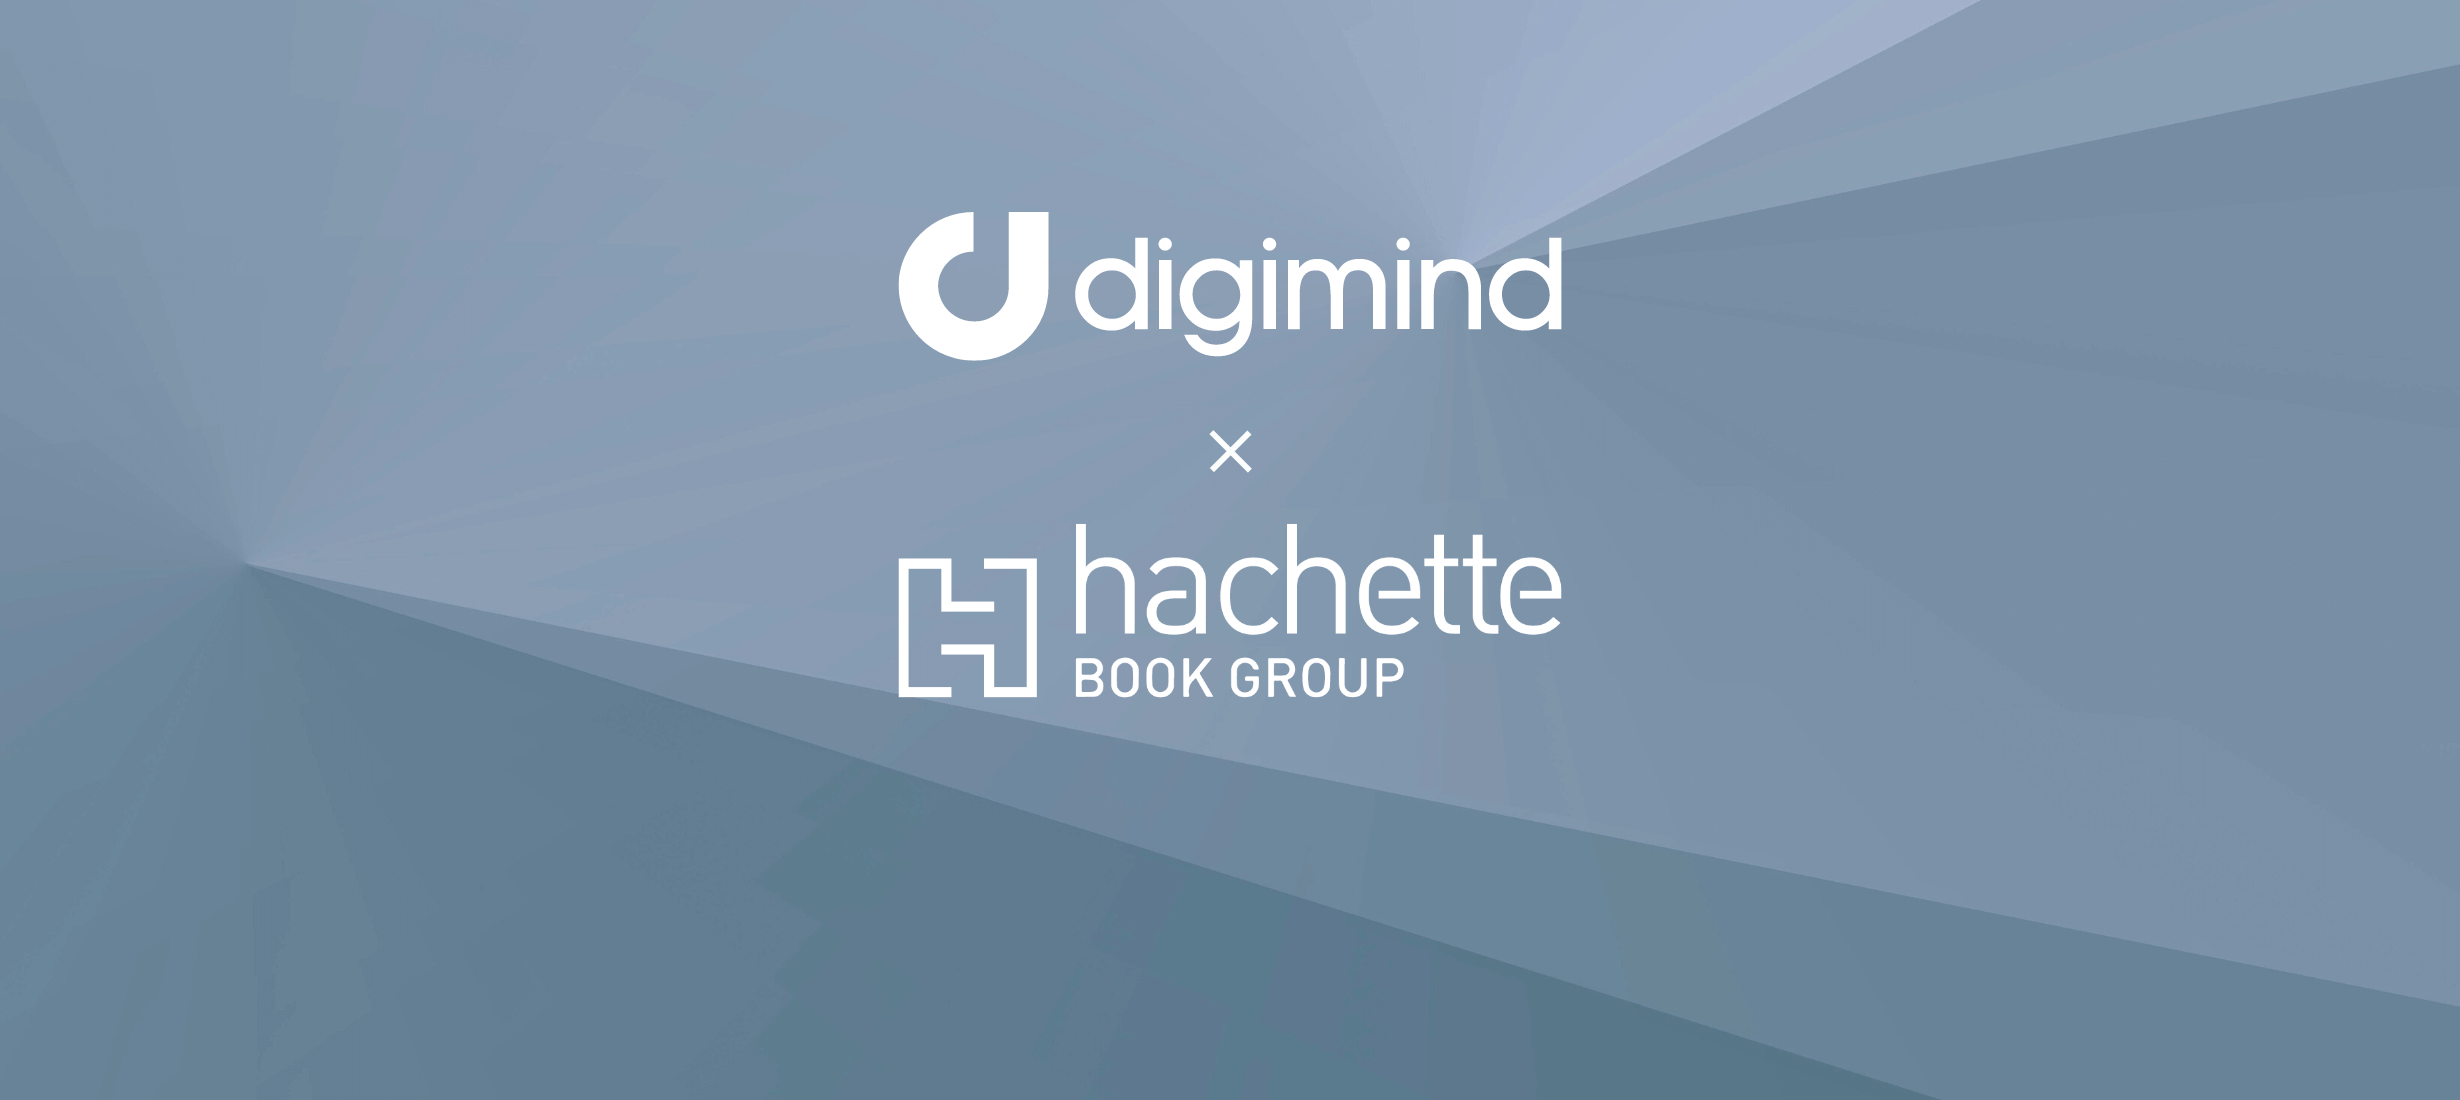 Hachette x Digimind (Blogpost Cover) 2-1